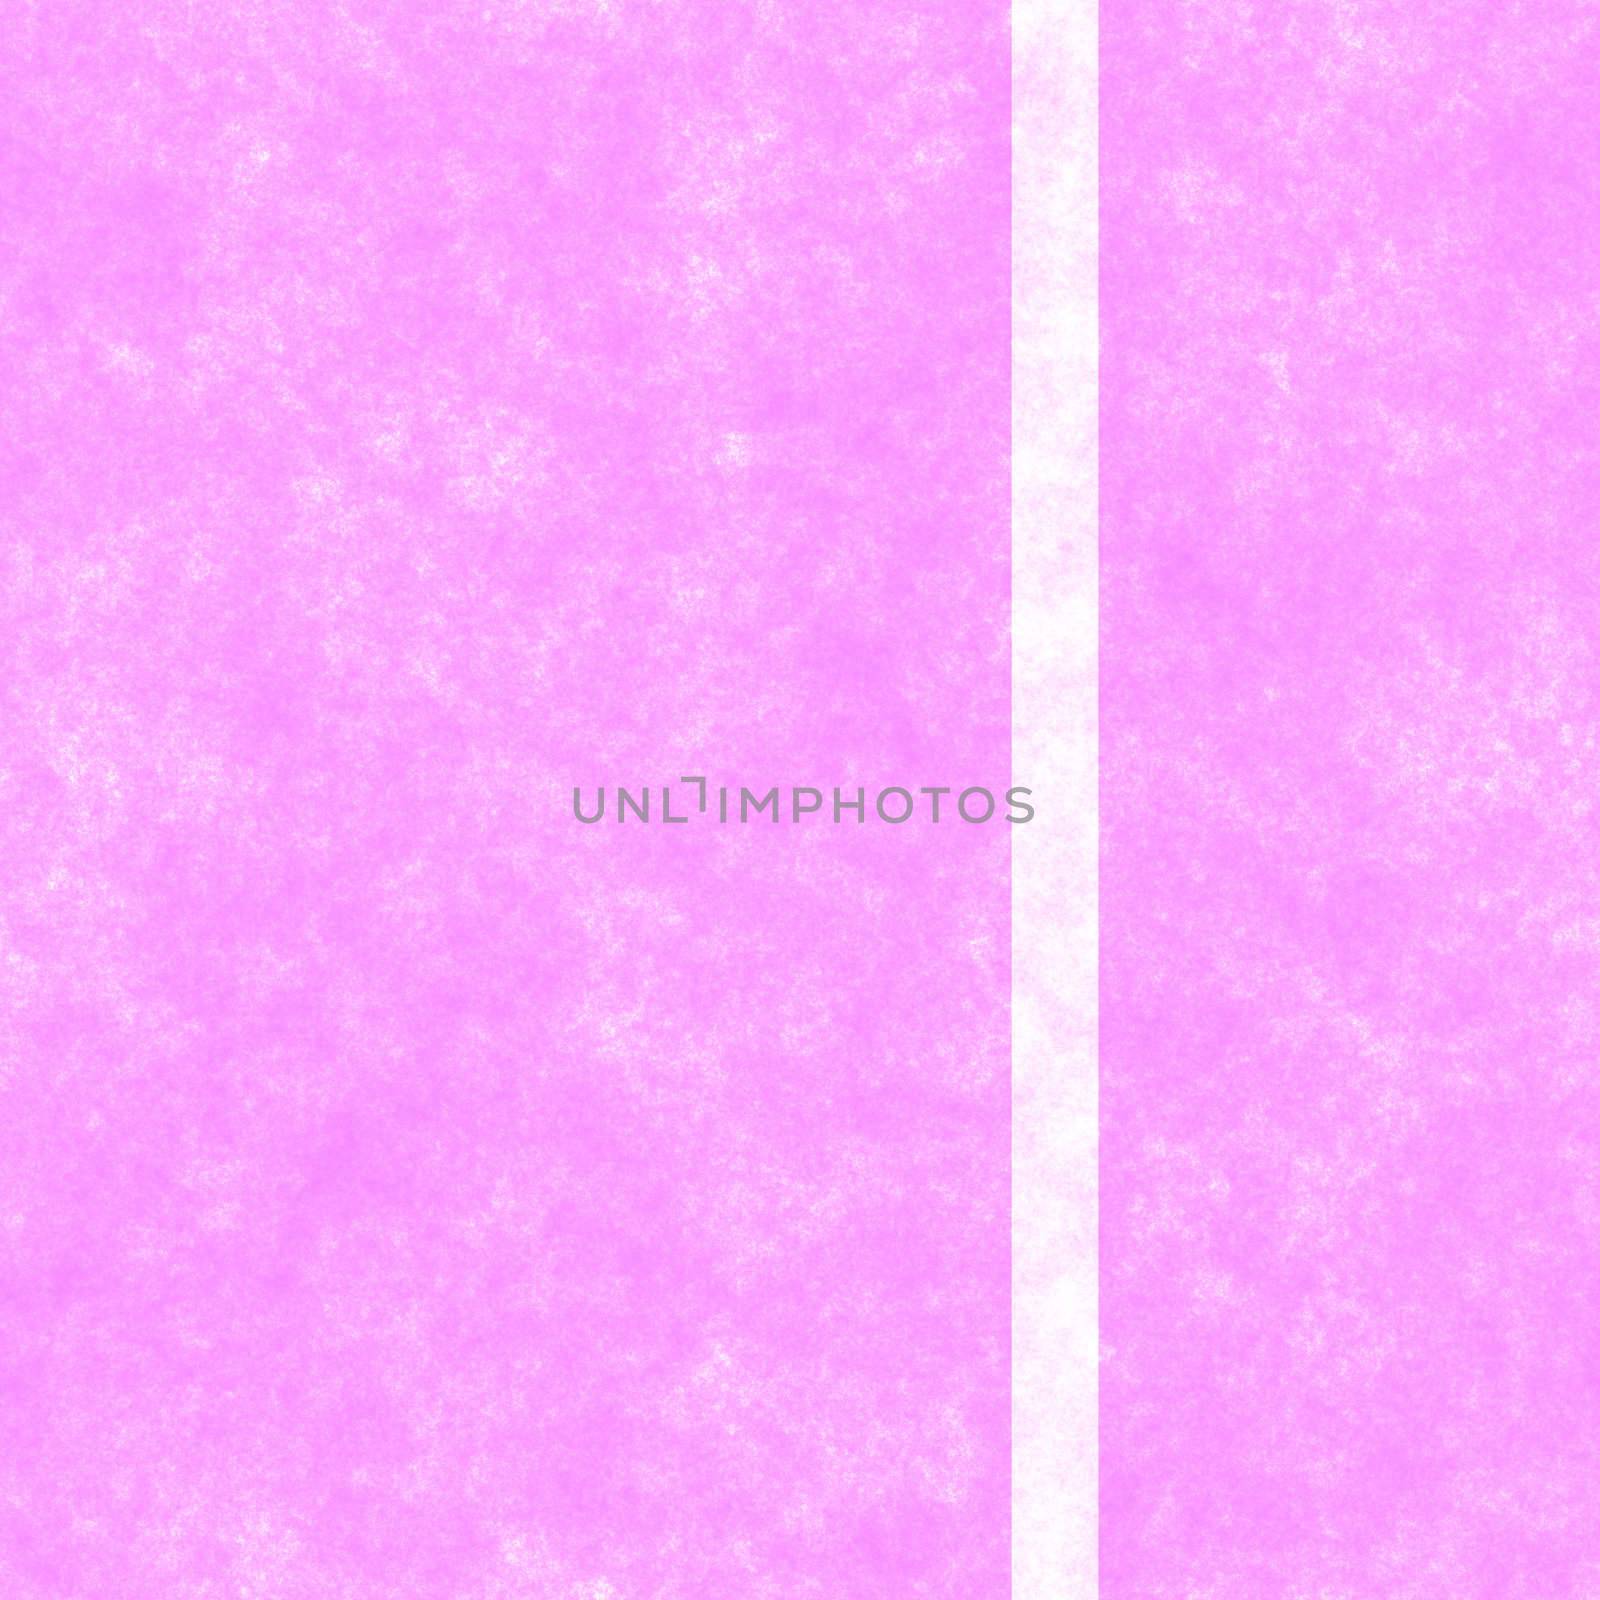 pink white  grunge wallpaper stripes that tile seamlessly as a pattern

